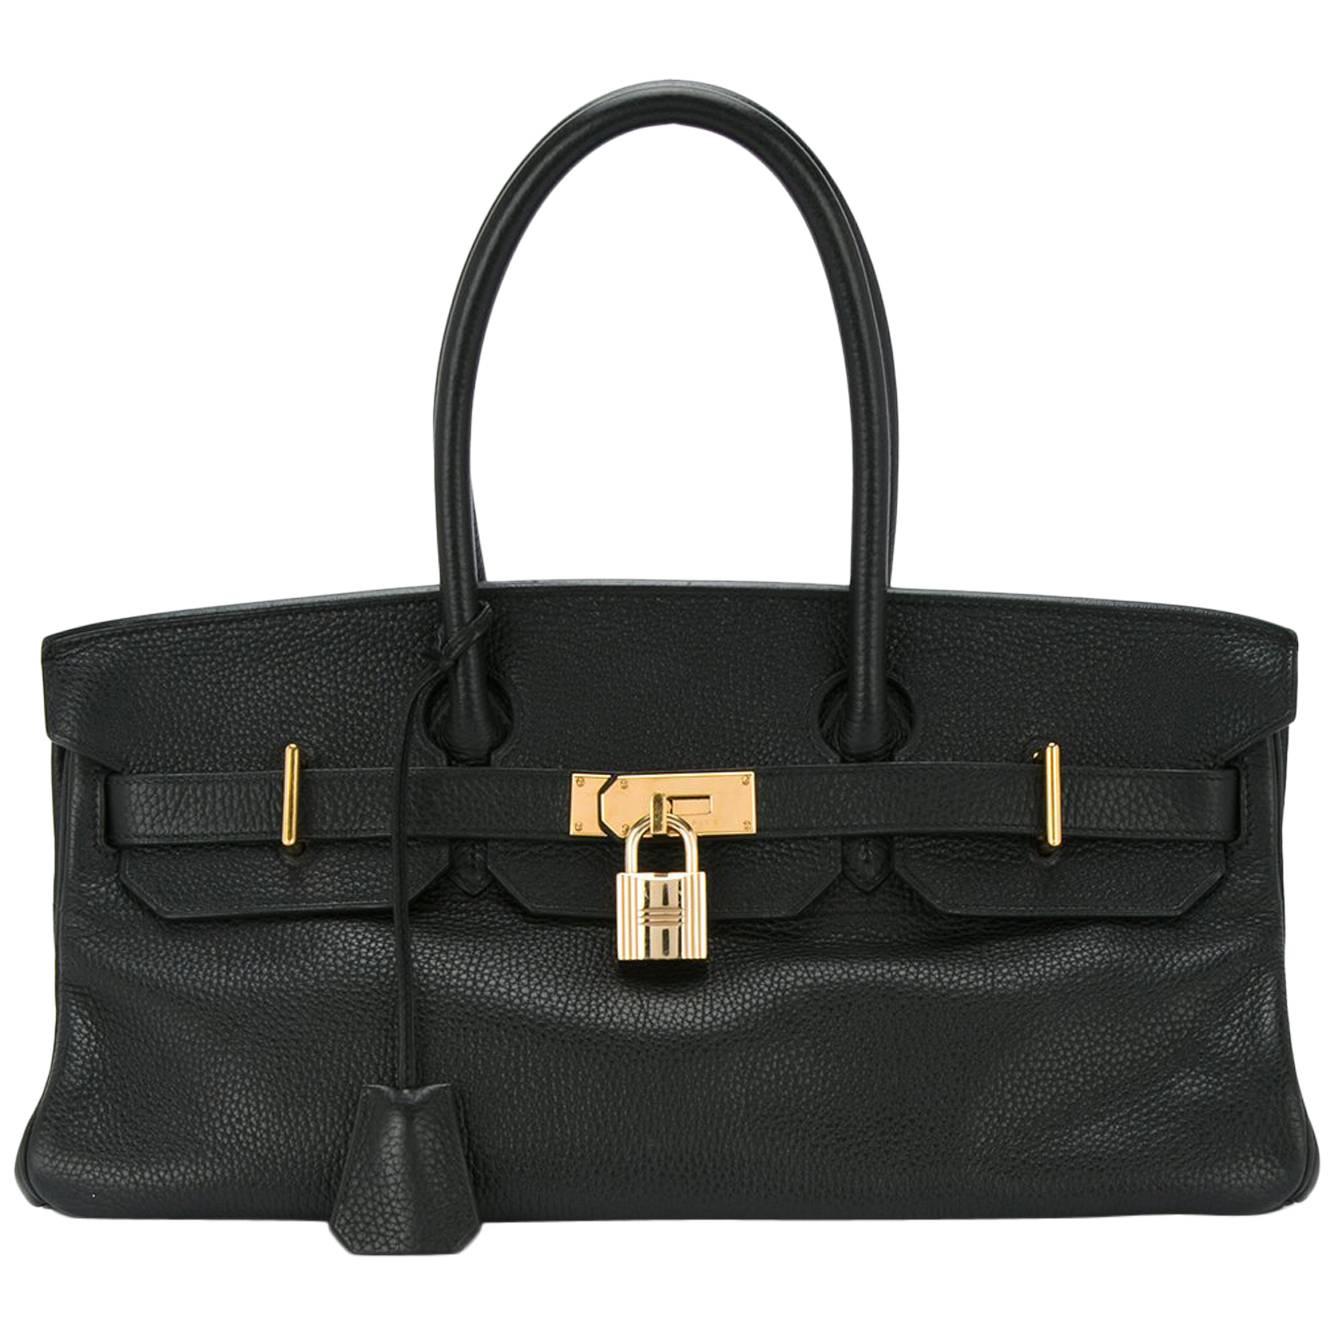 Hermes Birkin Black Leather Gold Hardware Top Handle Satchel Bag and Accessories